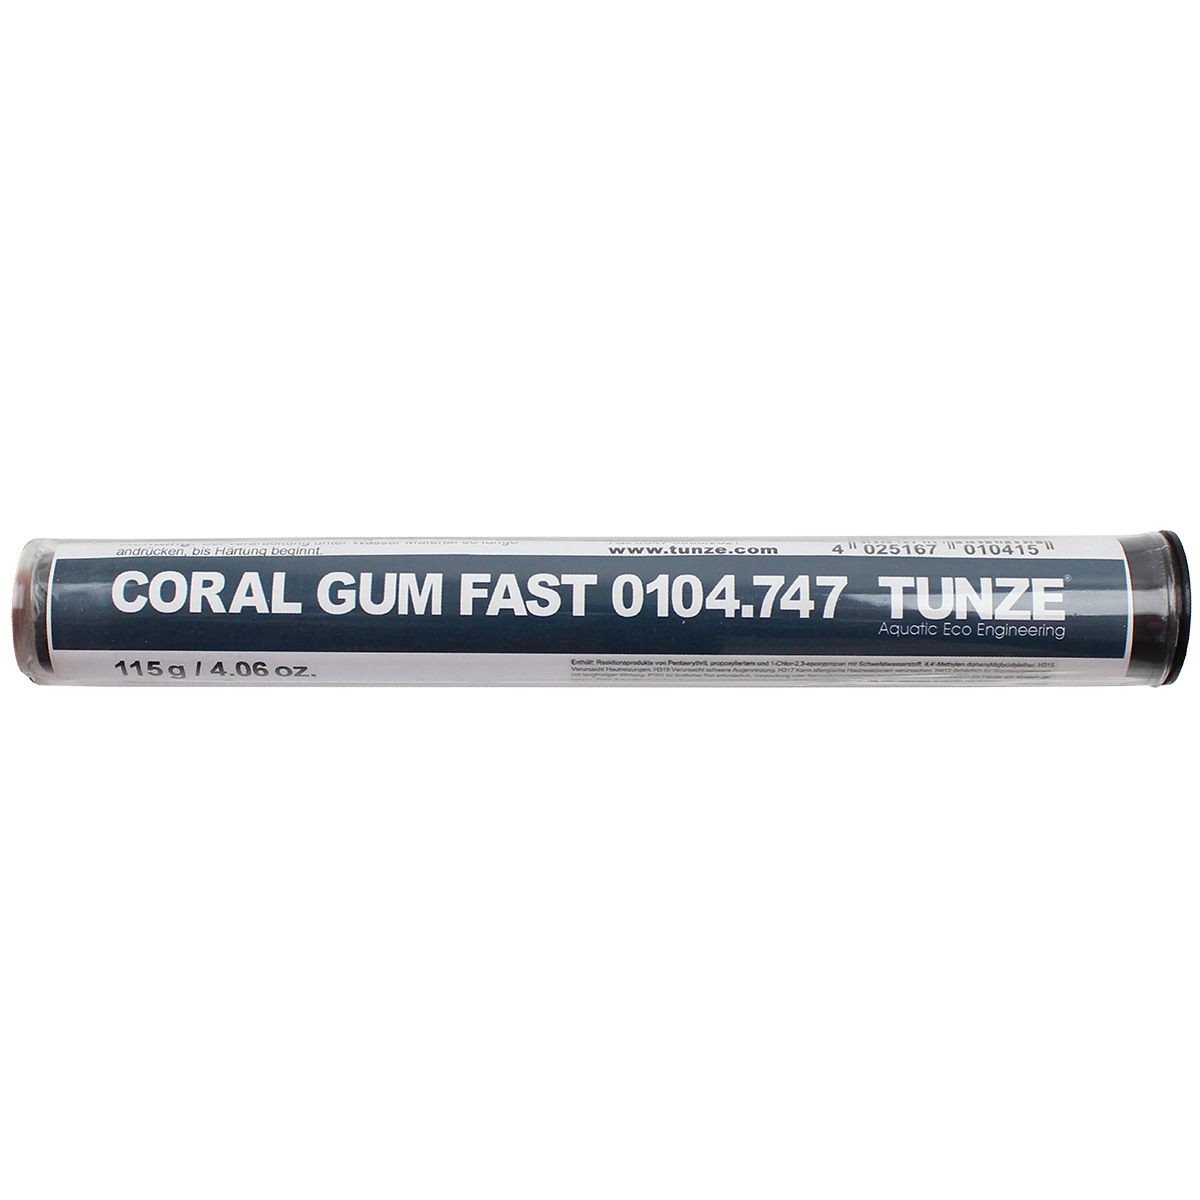 Coral Gum fast 115 g (4.06oz.)